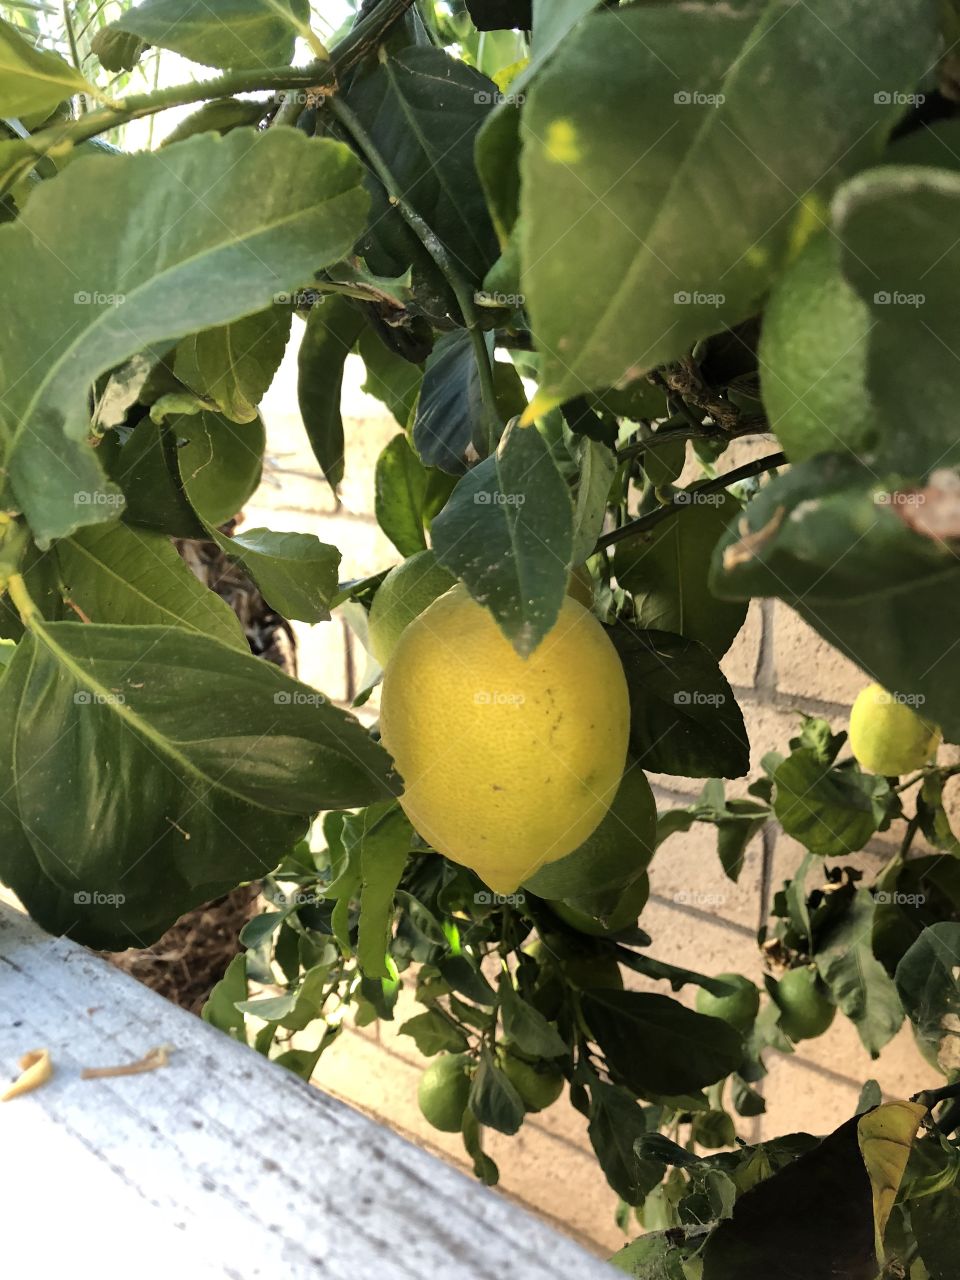 Lemons hanging from tree.